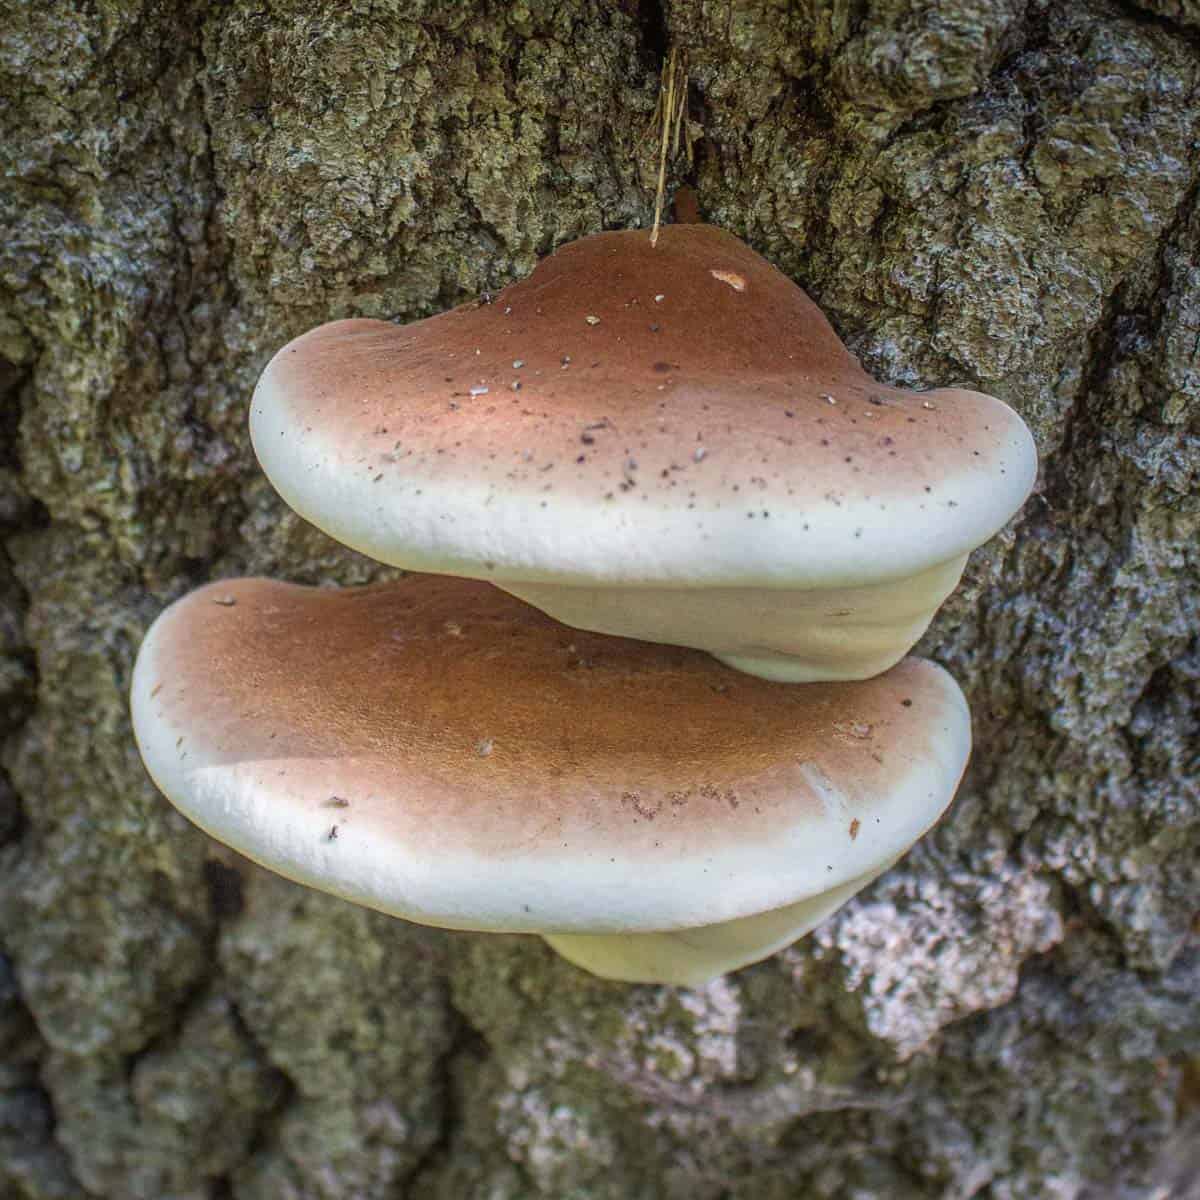 ischnoderma resinosum or resinous polypore mushrooms on a tree